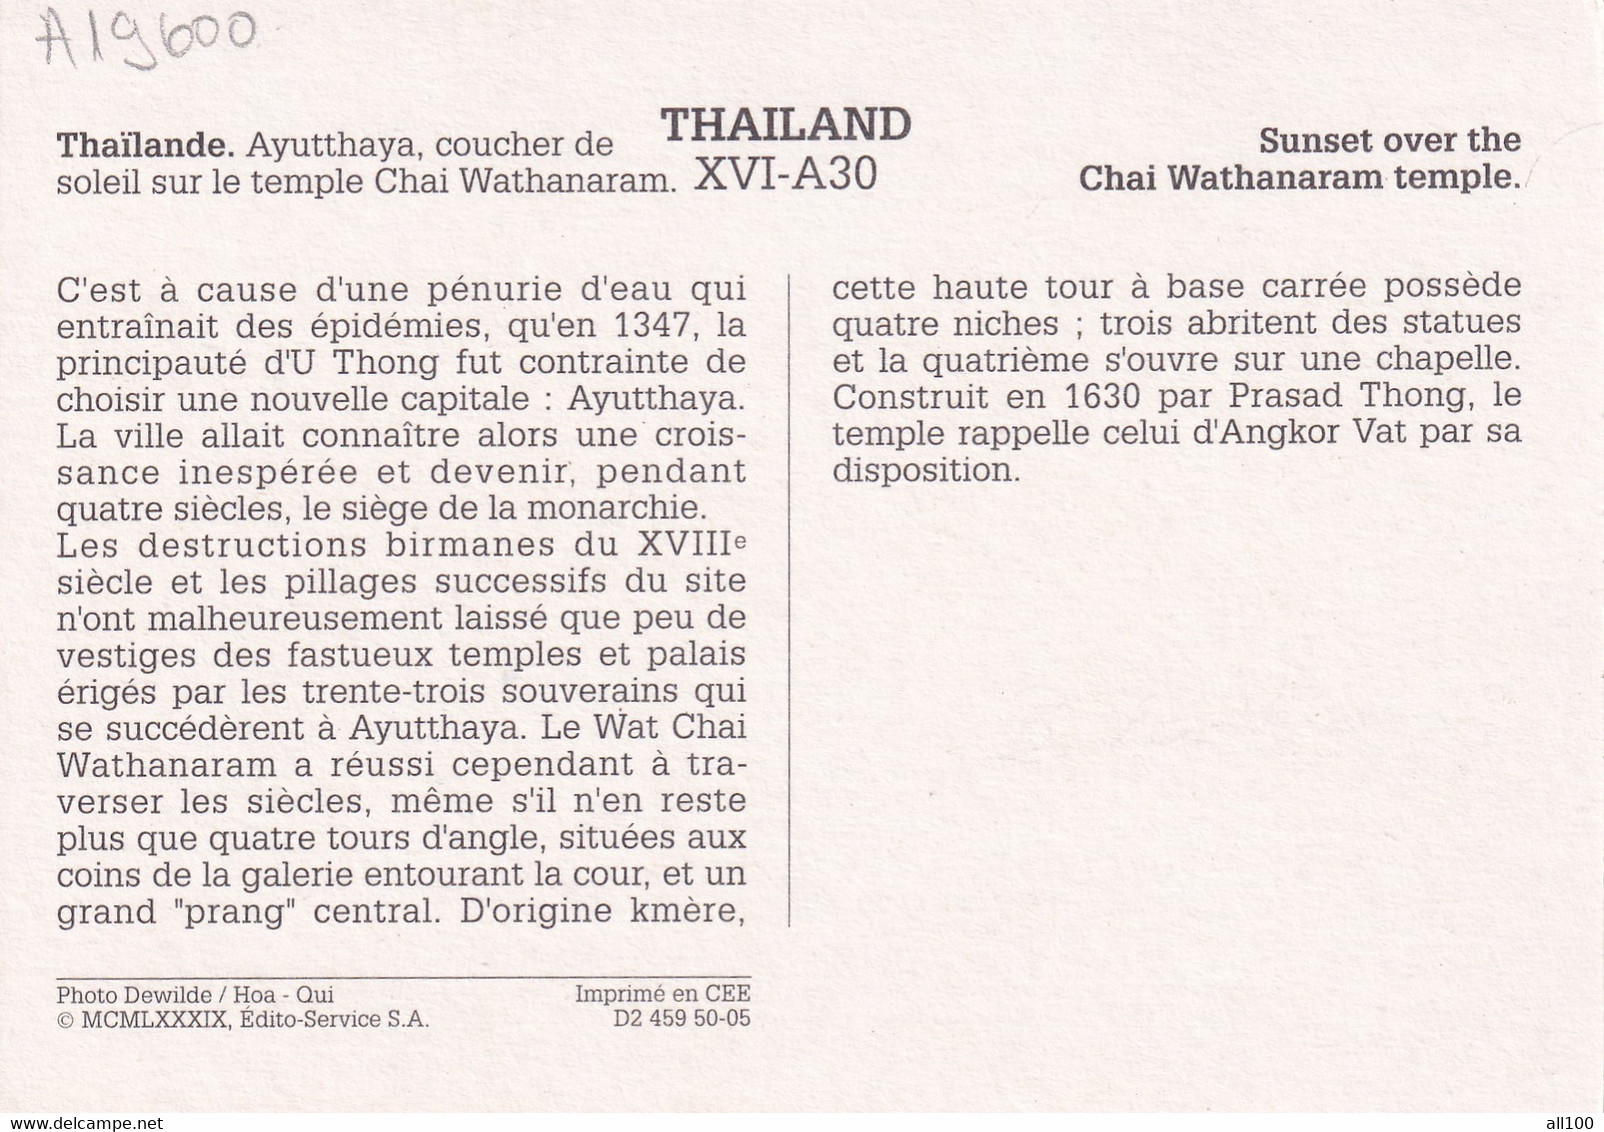 A19600 - SUNSET OVER THE CHAI WATHANARAM TEMPLE THAILAND AYUTTHAYA COUCHER DE SOLEIL SUR LE TEMPLE POST CARD UNUSED - Thaïlande